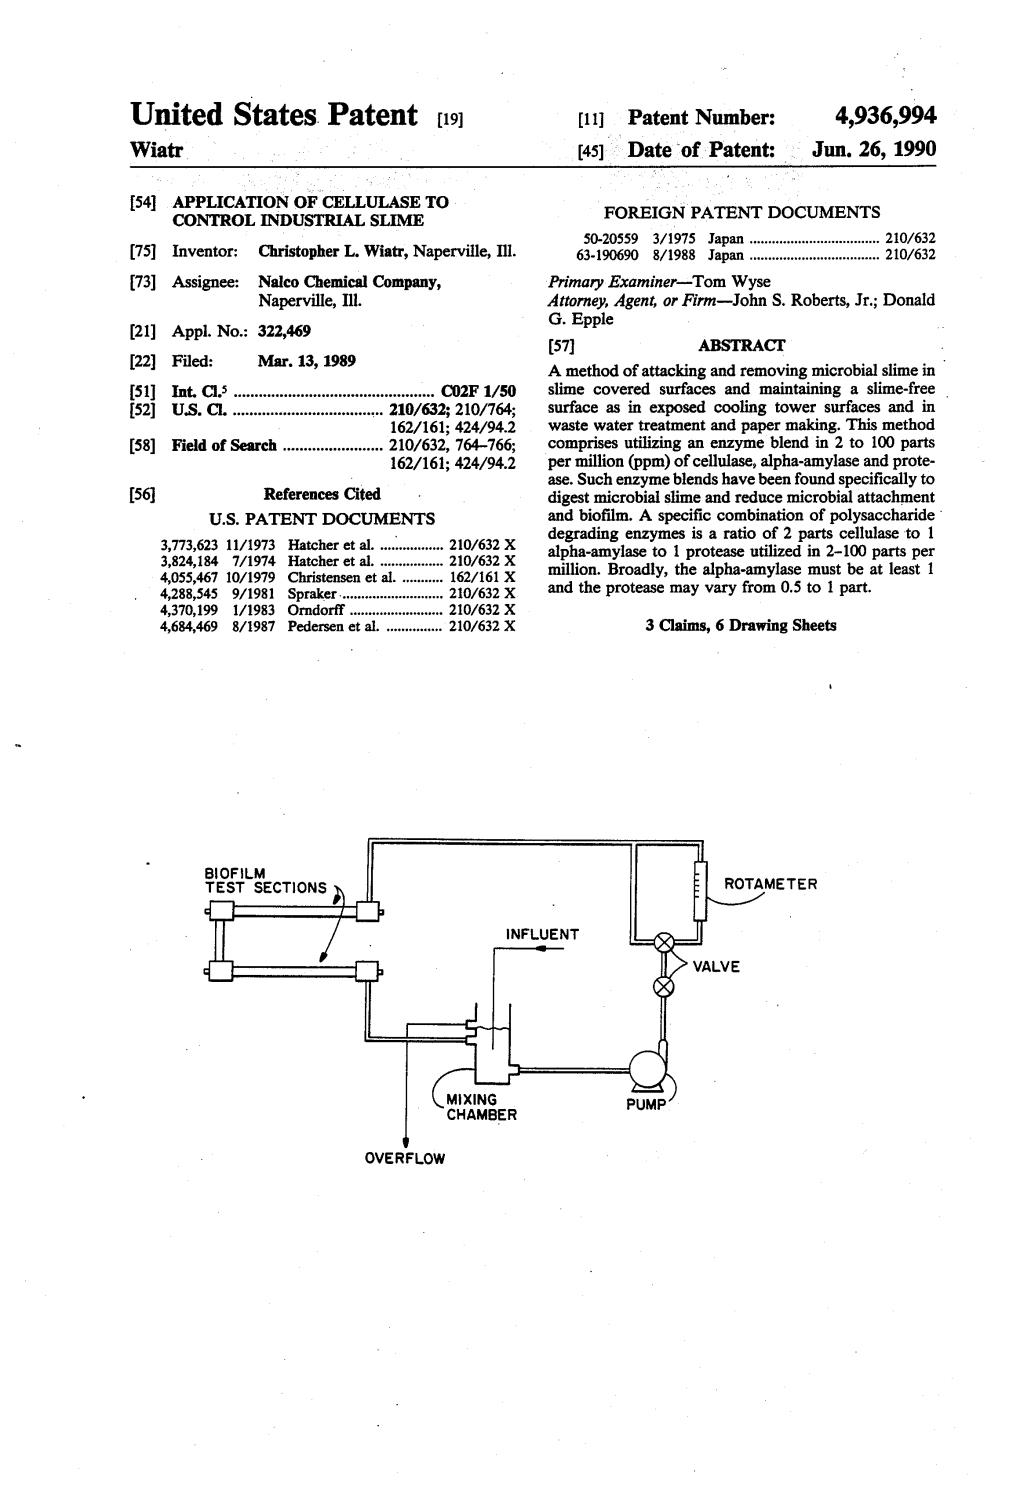 United States Patent (19) 11 Patent Number: 4,936,994 Wiatri (45) Date of Patent: Jun